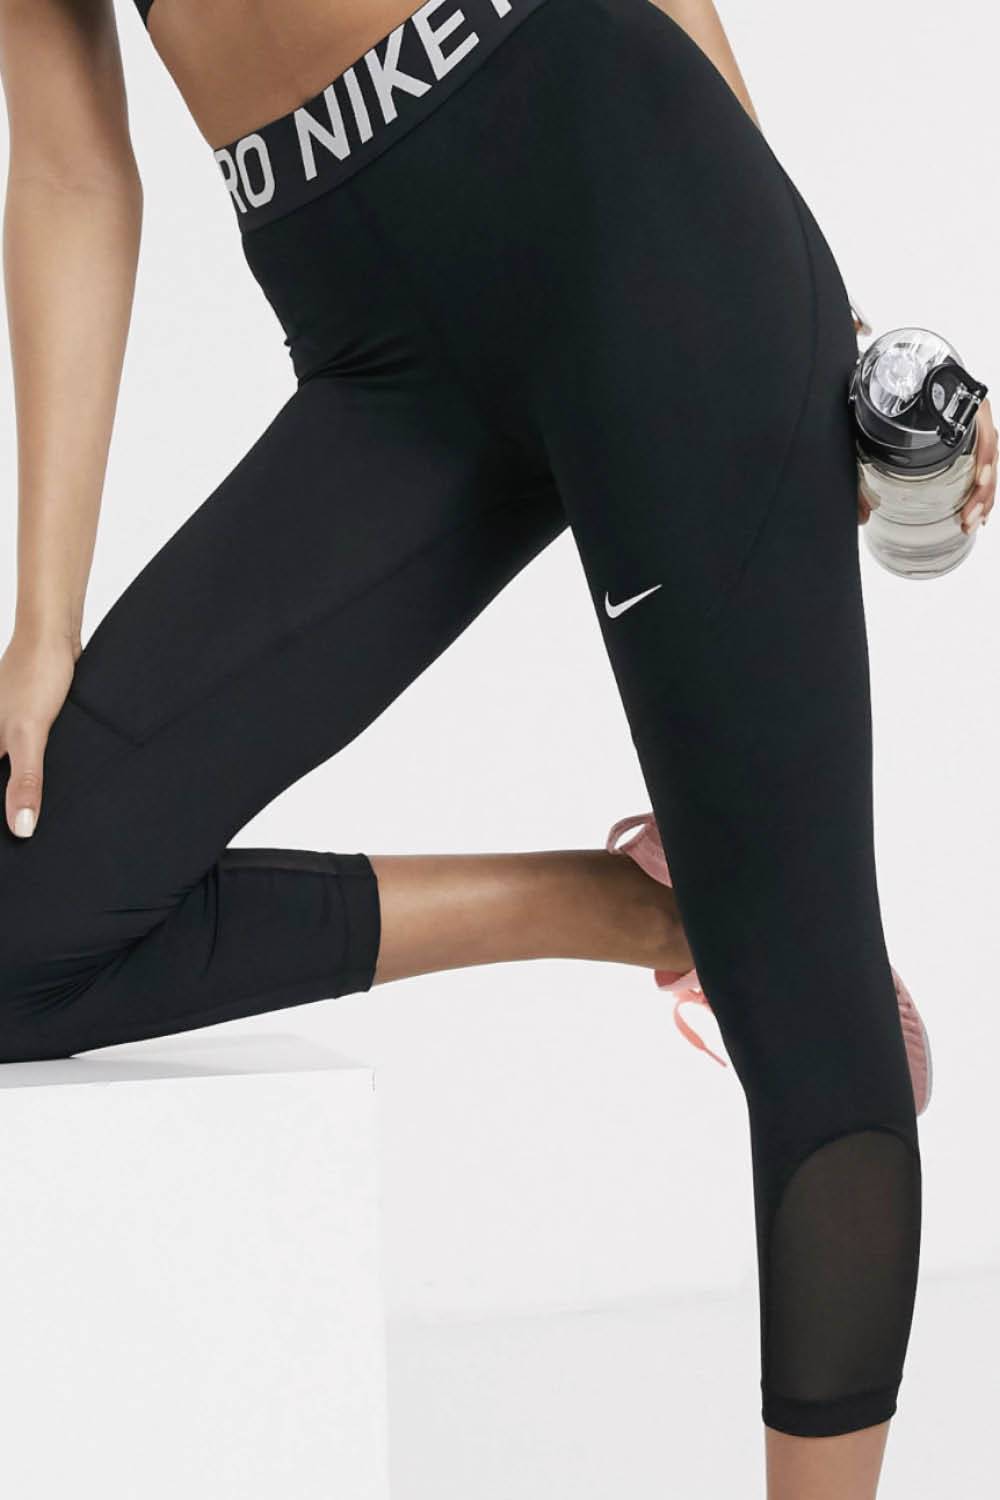 leggings Nike transparencia